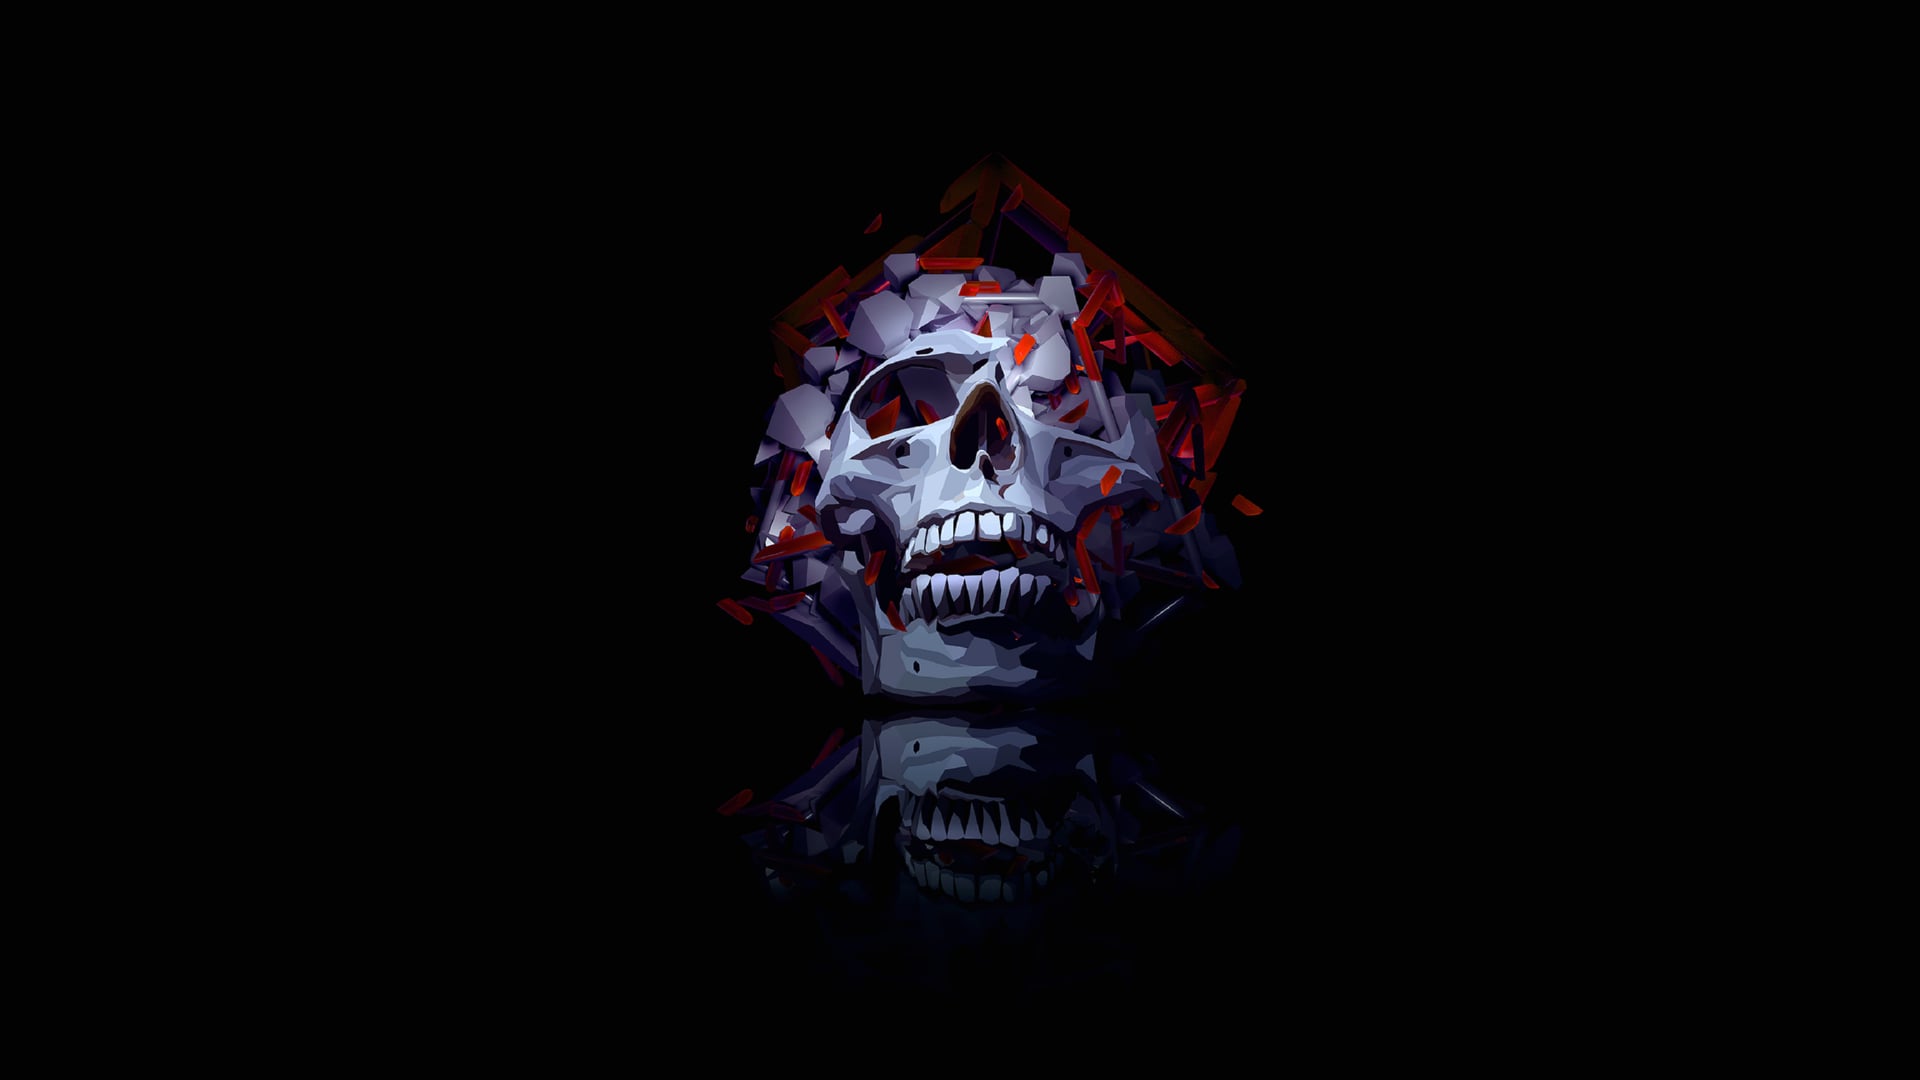 Digital Art Skull at 1152 x 864 size wallpapers HD quality